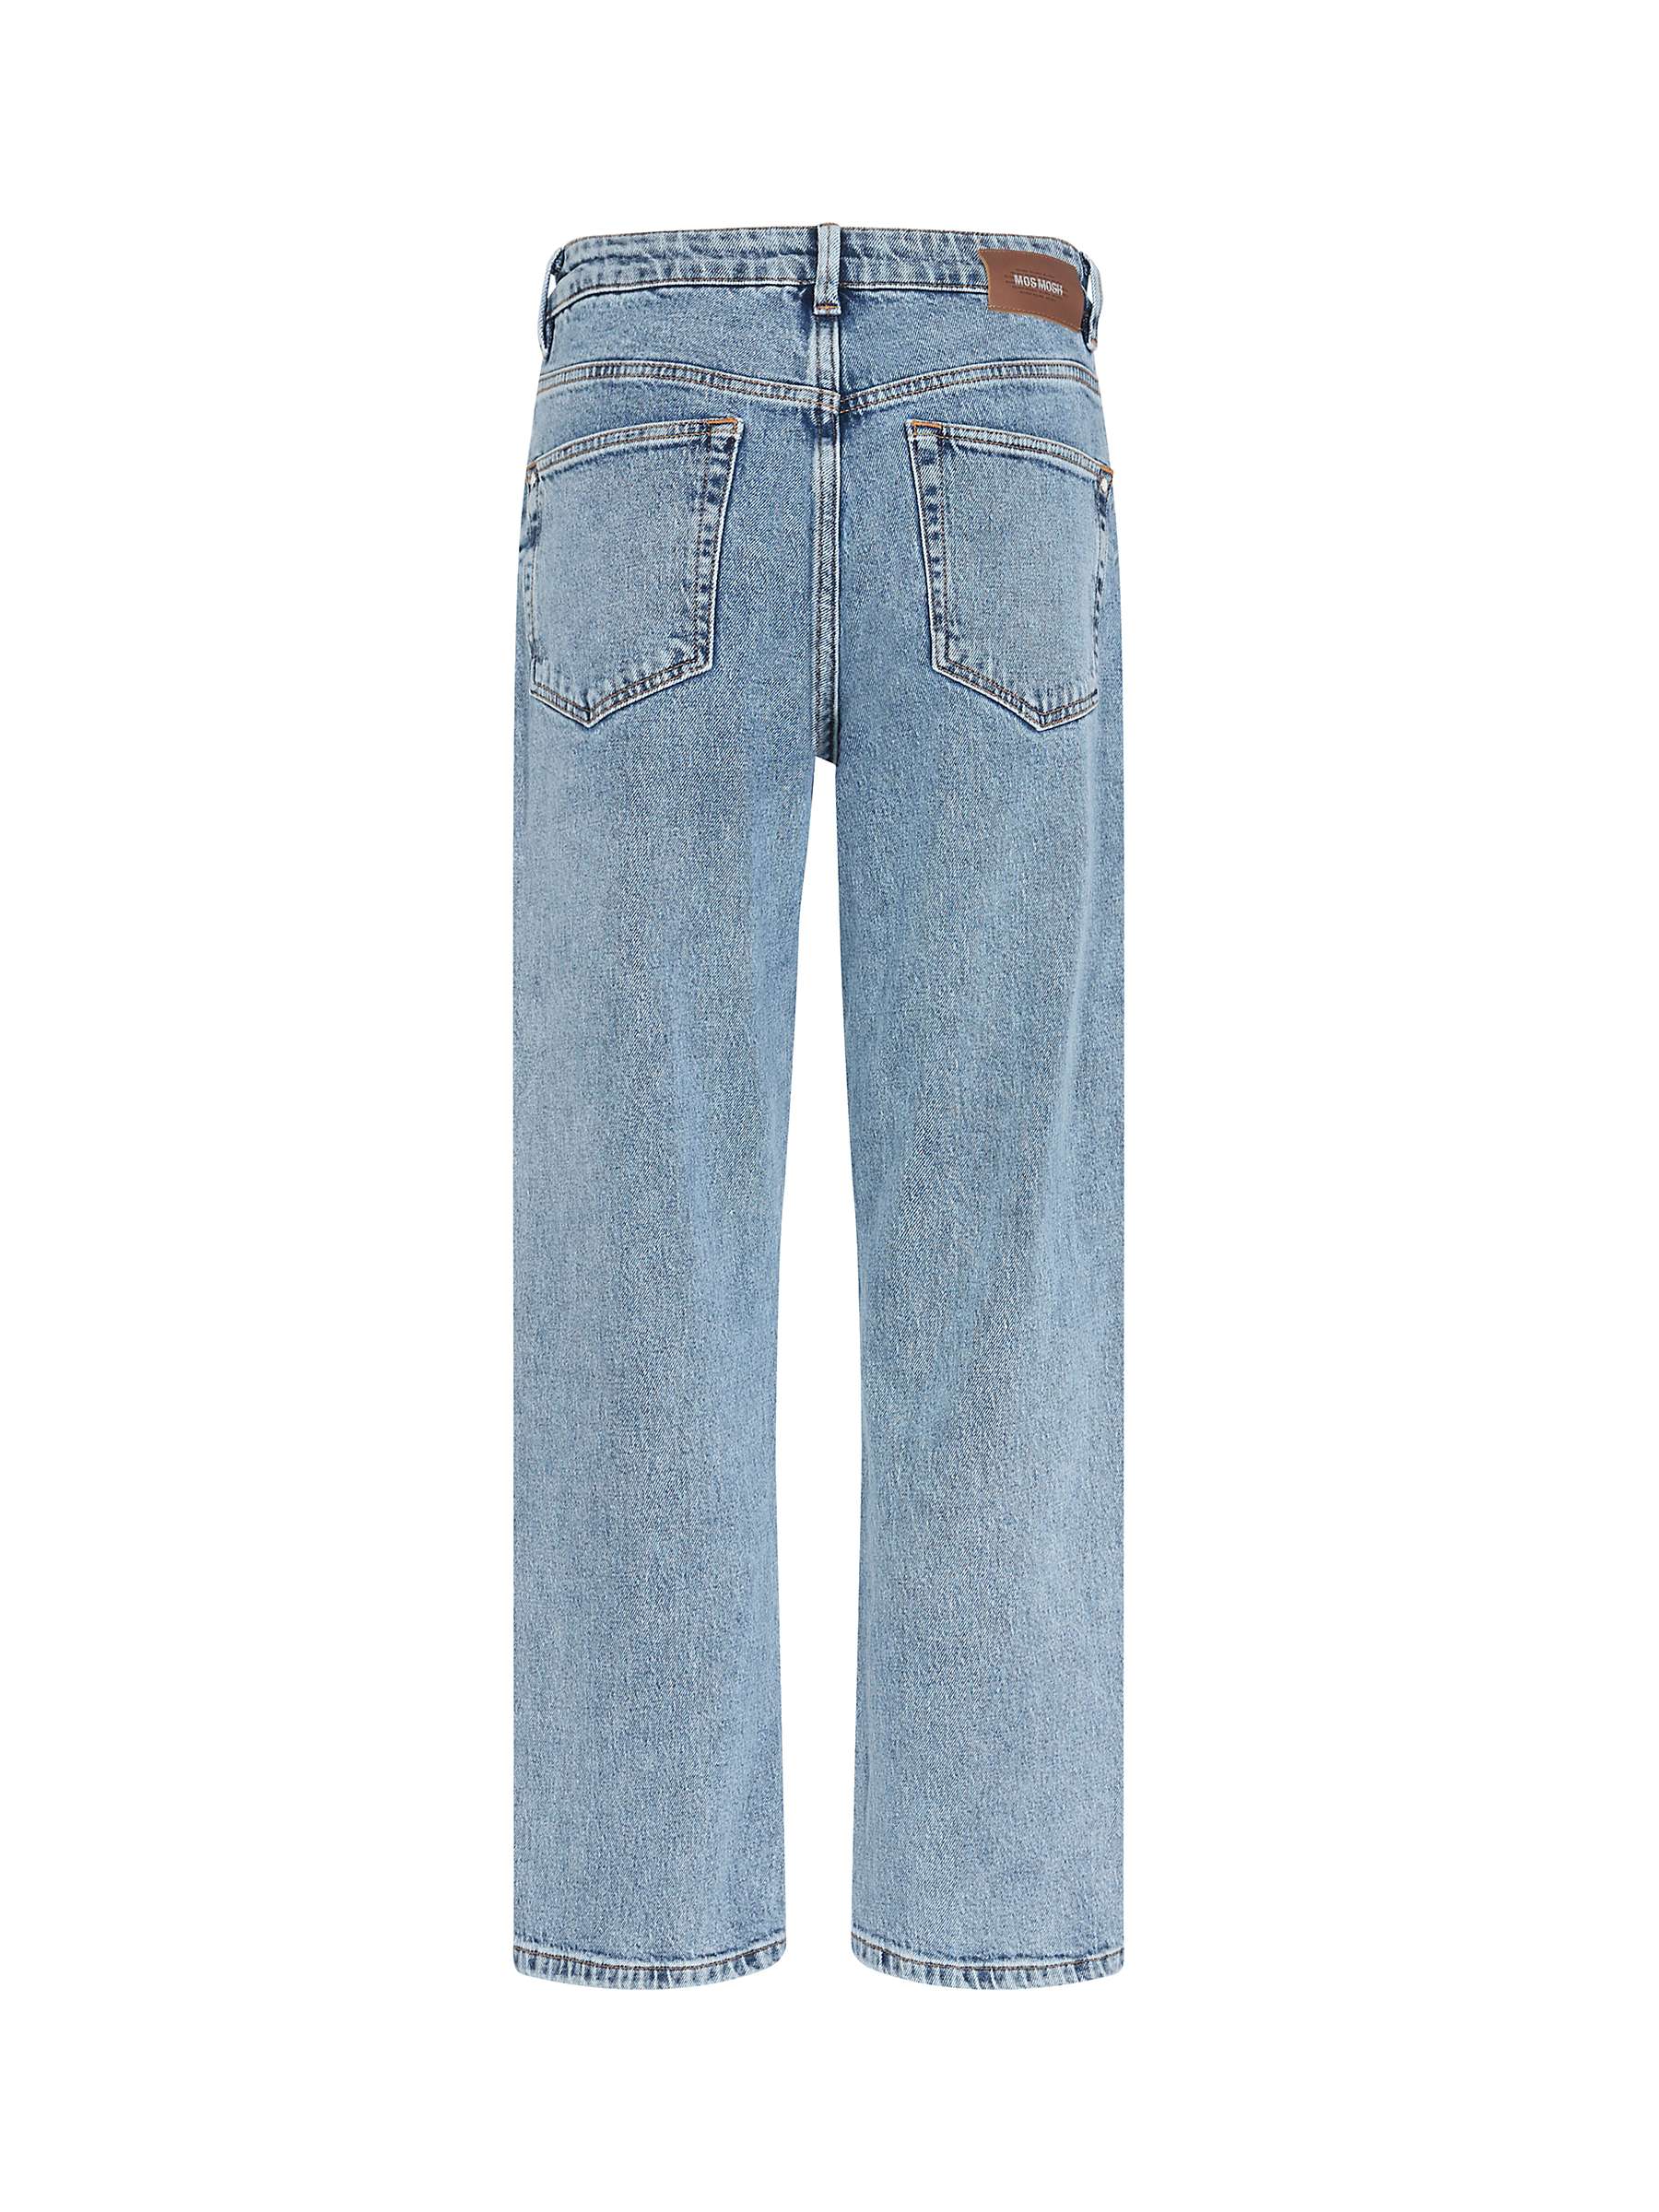 Buy MOS MOSH Rachel Modra Jeans, Light Blue Online at johnlewis.com